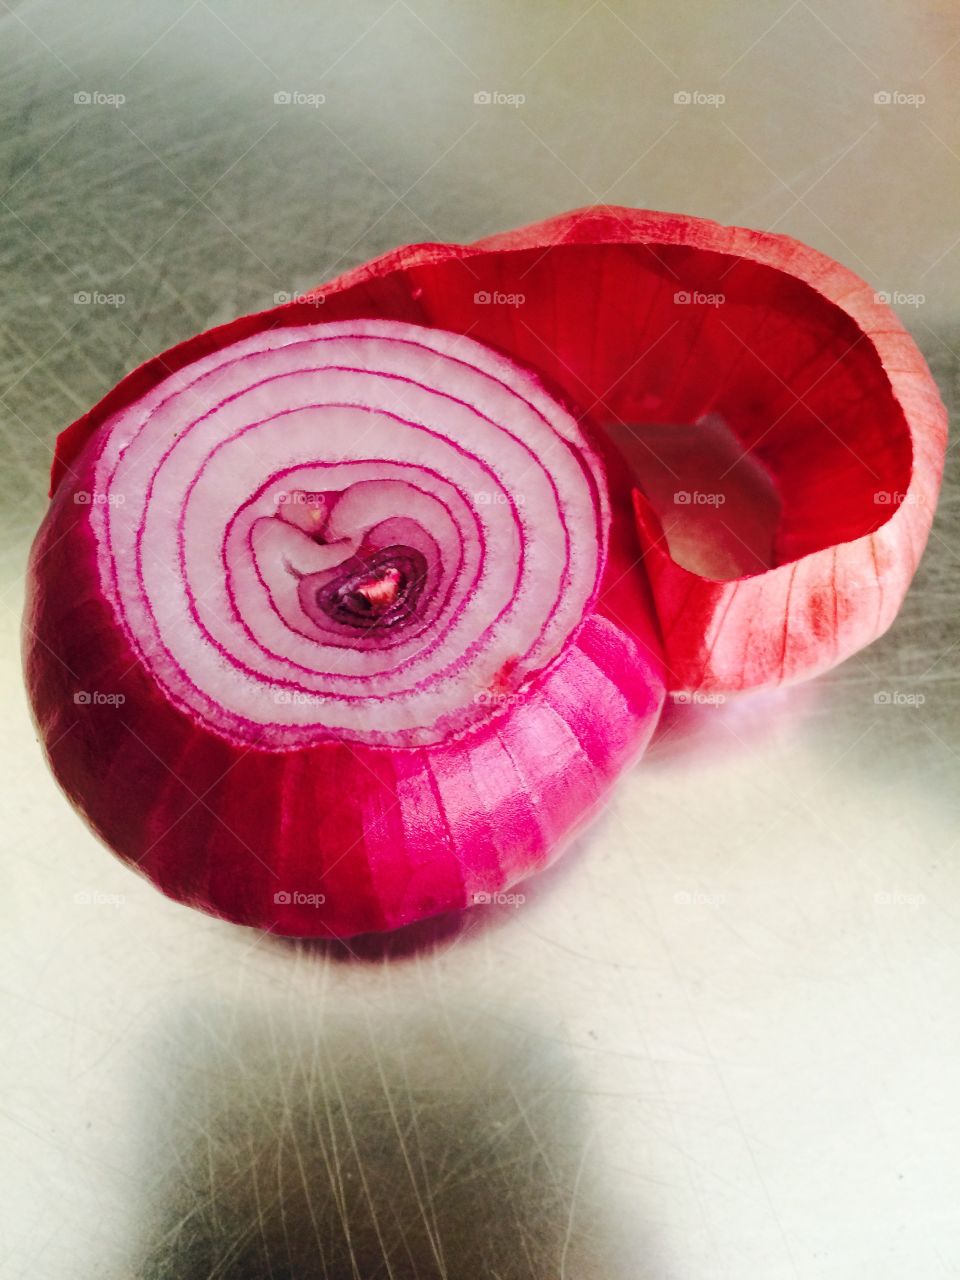 Onion vegitable